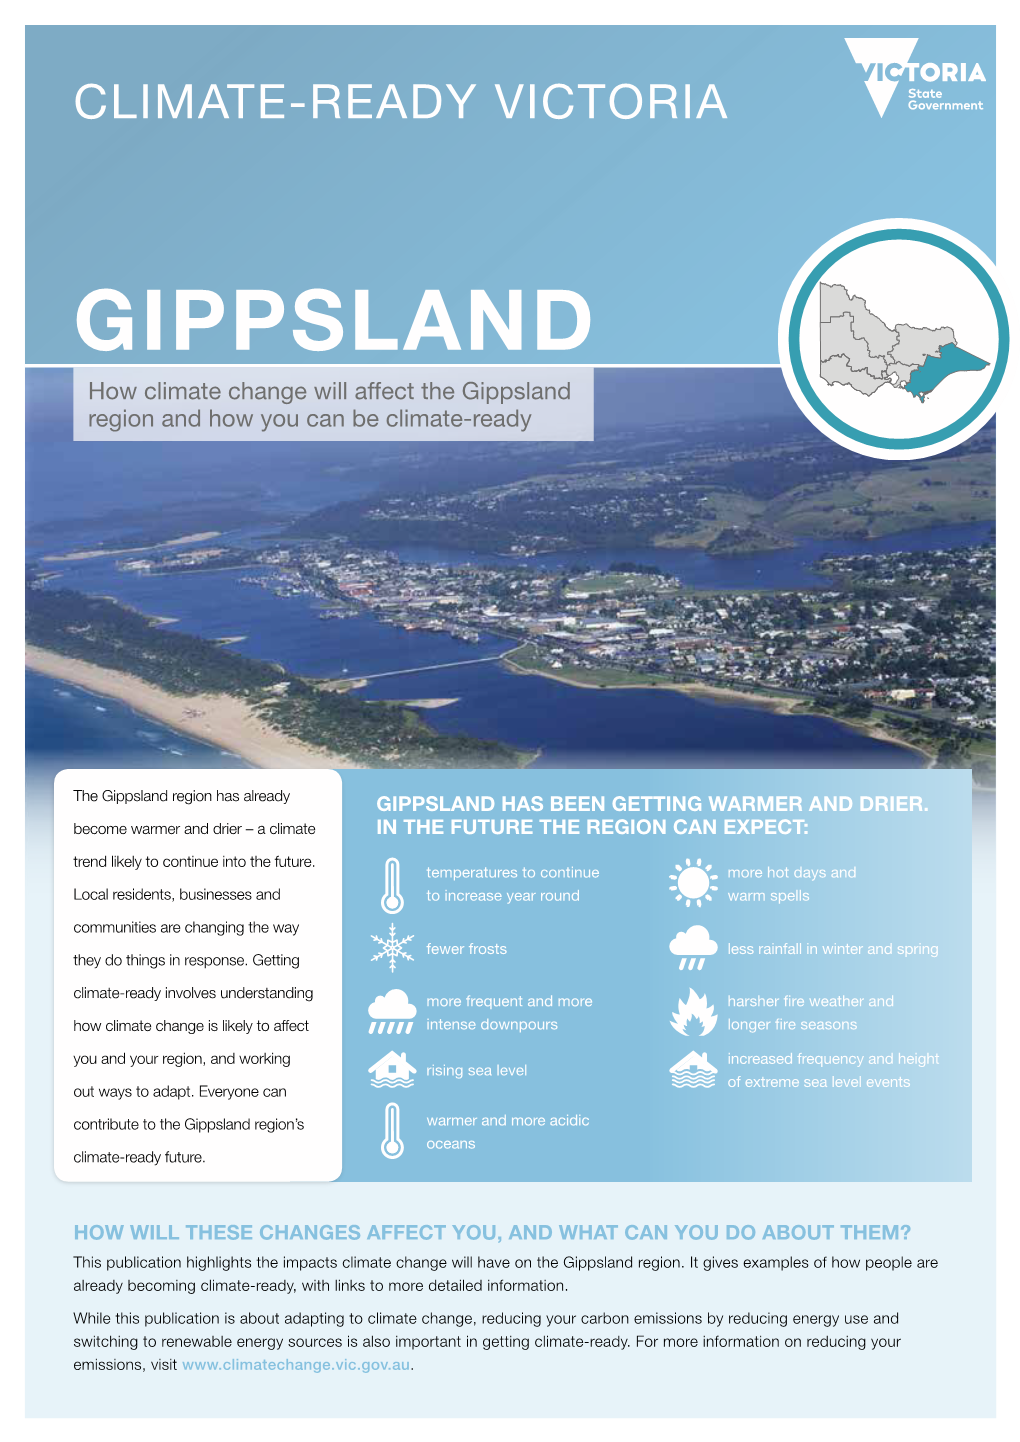 Climate-Ready Victoria: Gippsland, November 2015